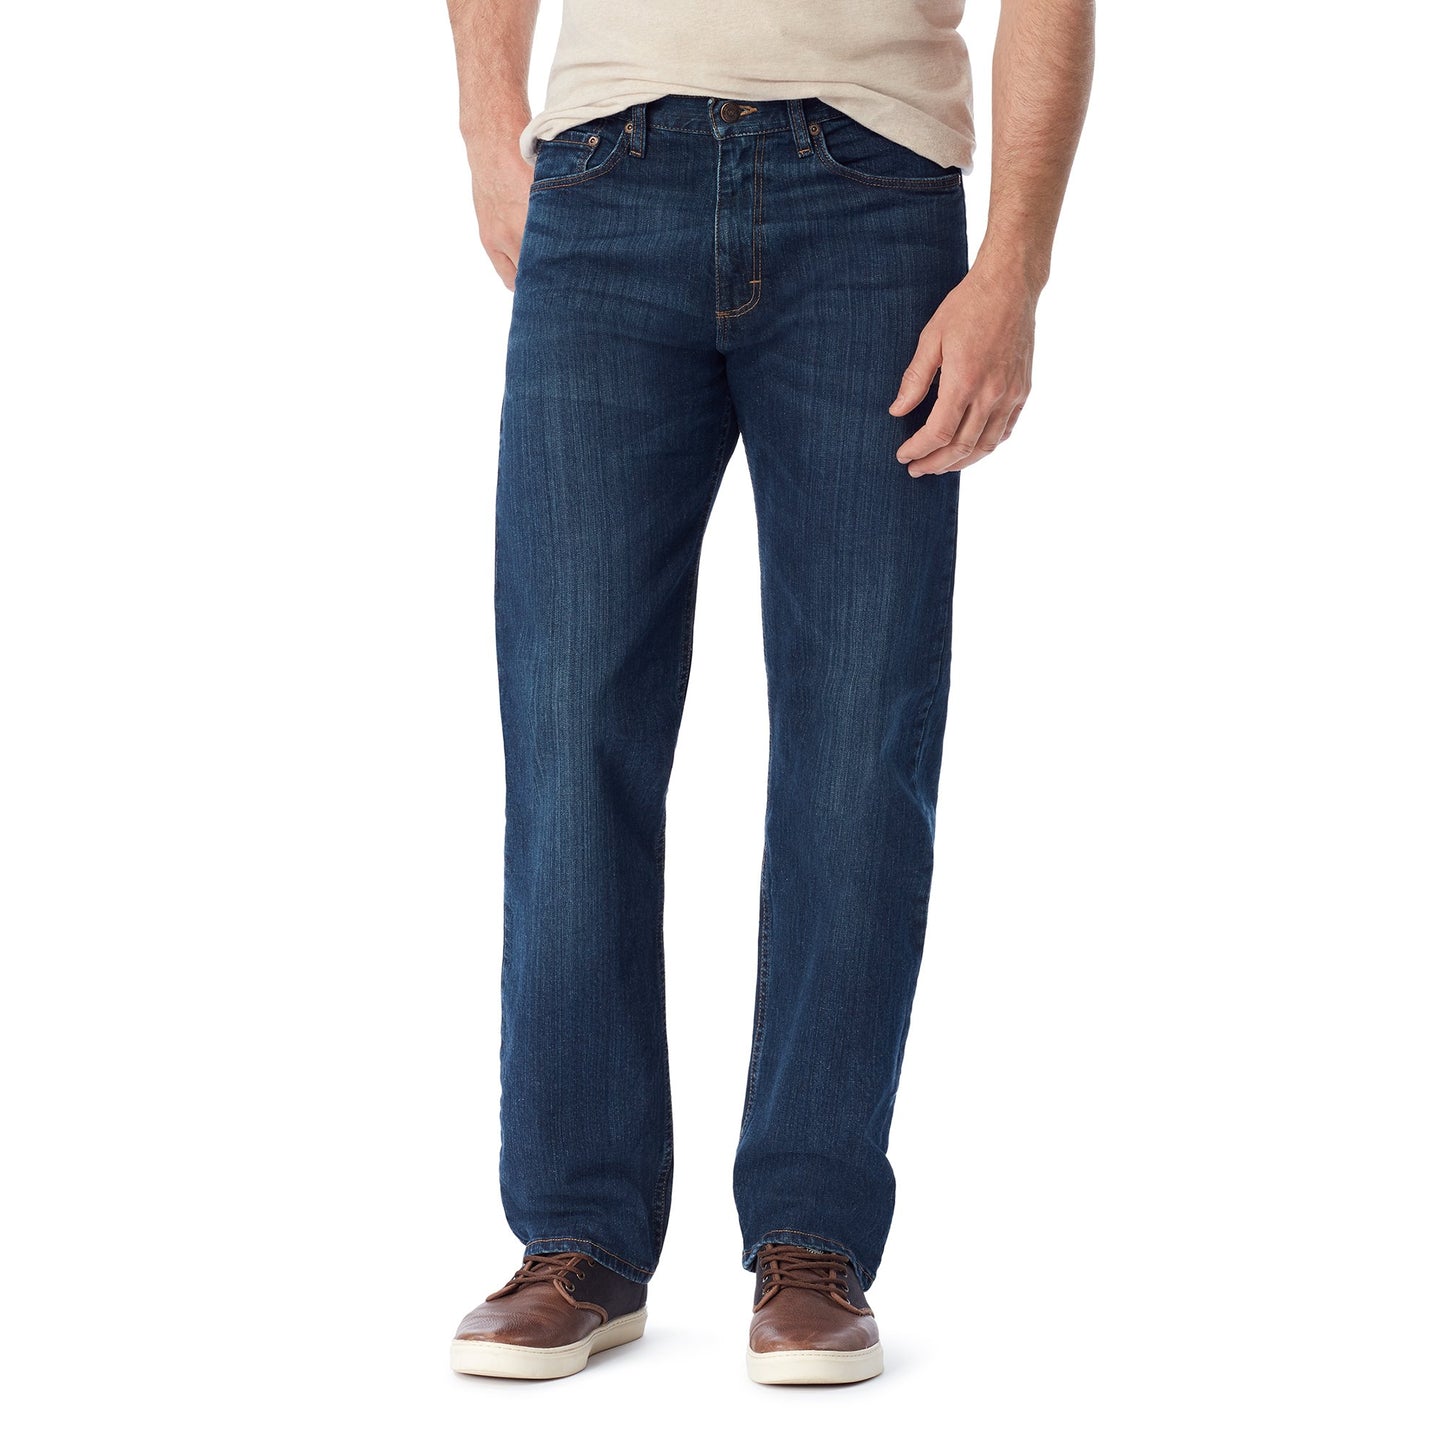 Wrangler Authentics Men's Big & Tall Classic 5-Pocket Relaxed Fit Jean, Flex Dark, 44W x 30L